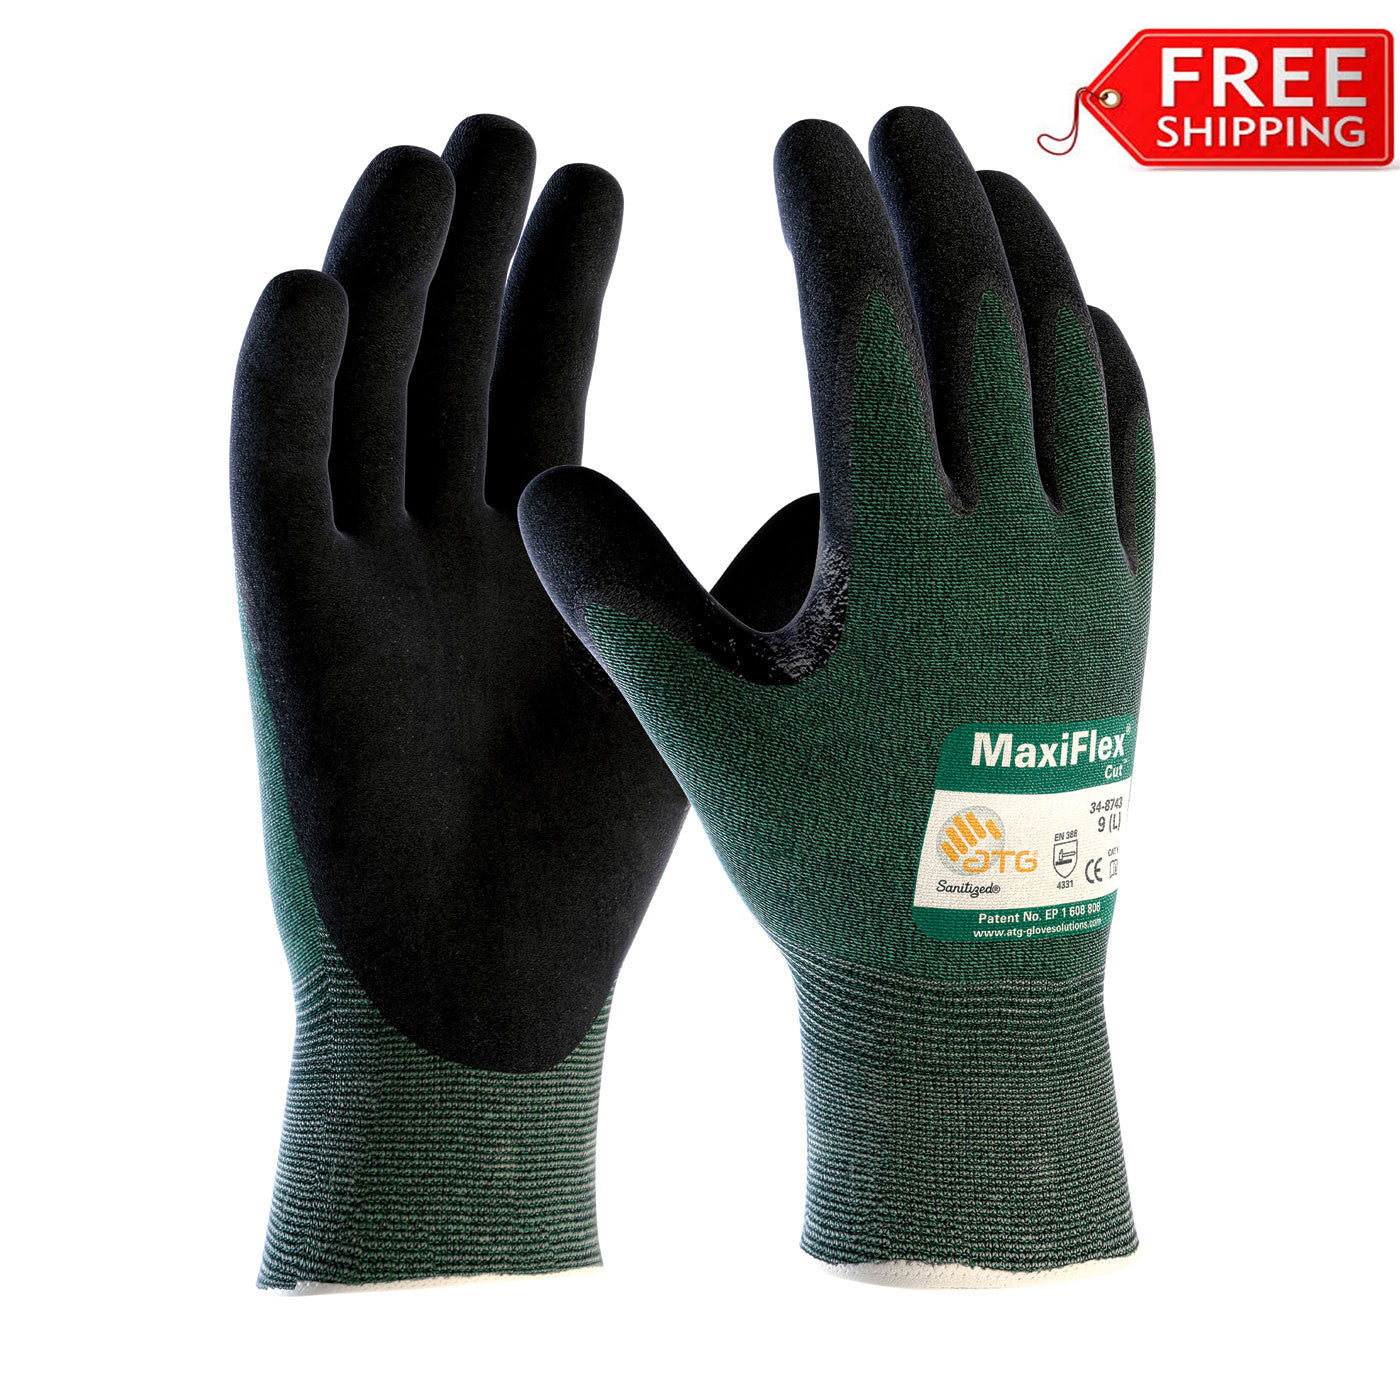 MaxiFlex Cut 34-8743 Cut Resistant Work Gloves by ATG, Free Shipping! ANSI  Cut Level A2 (1 Dozen)